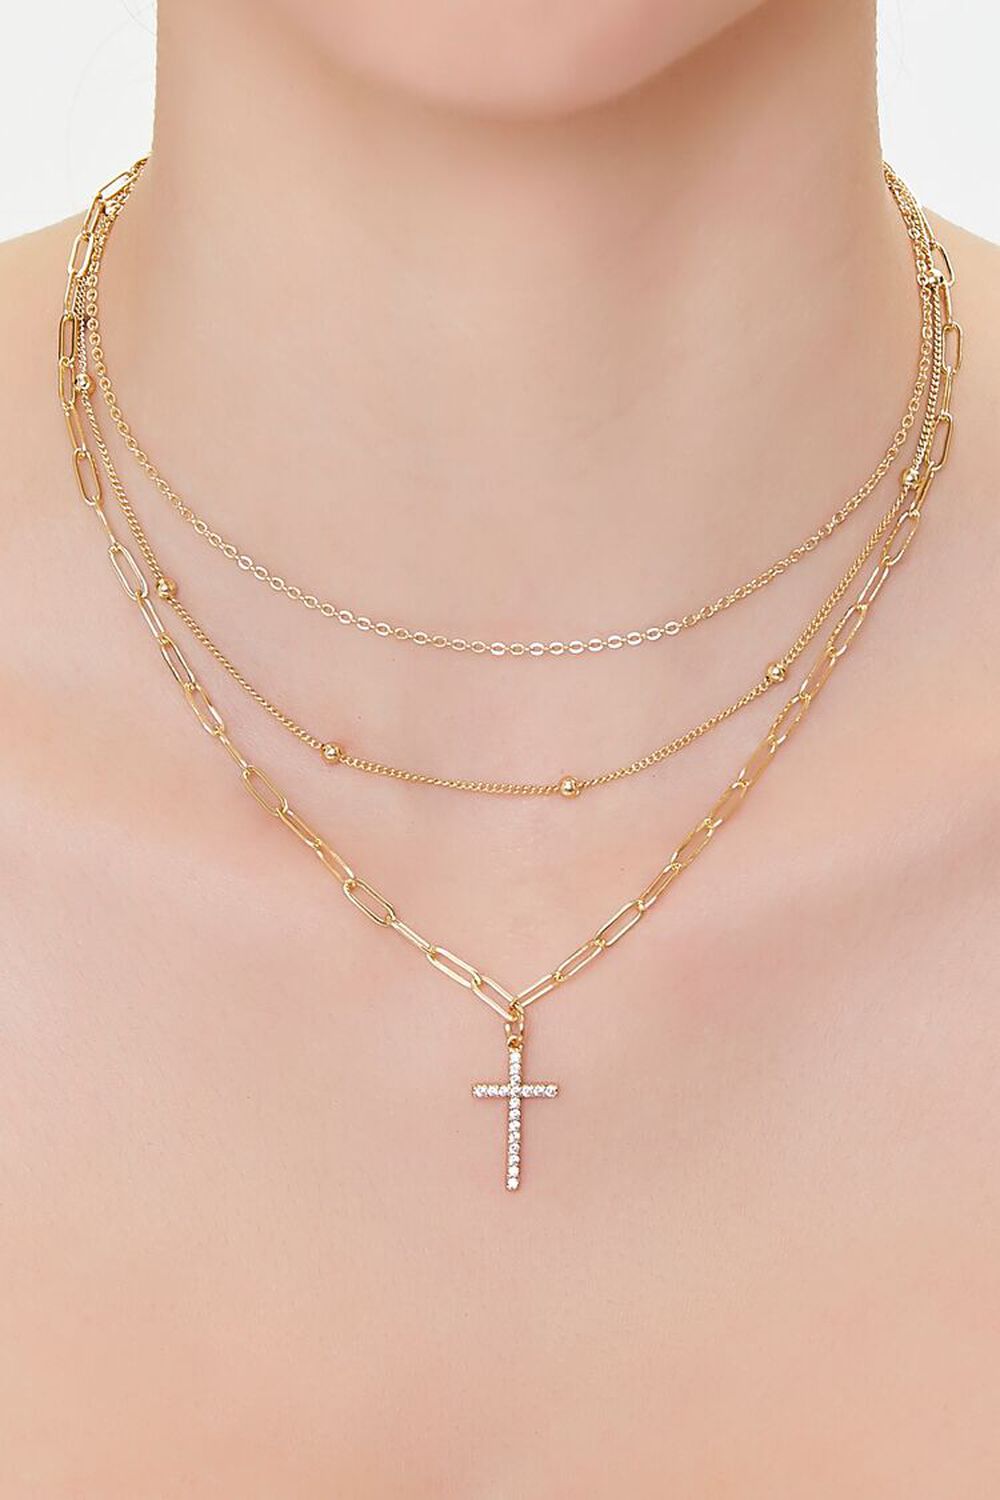 Rhinestone Cross Layered Necklace, image 1